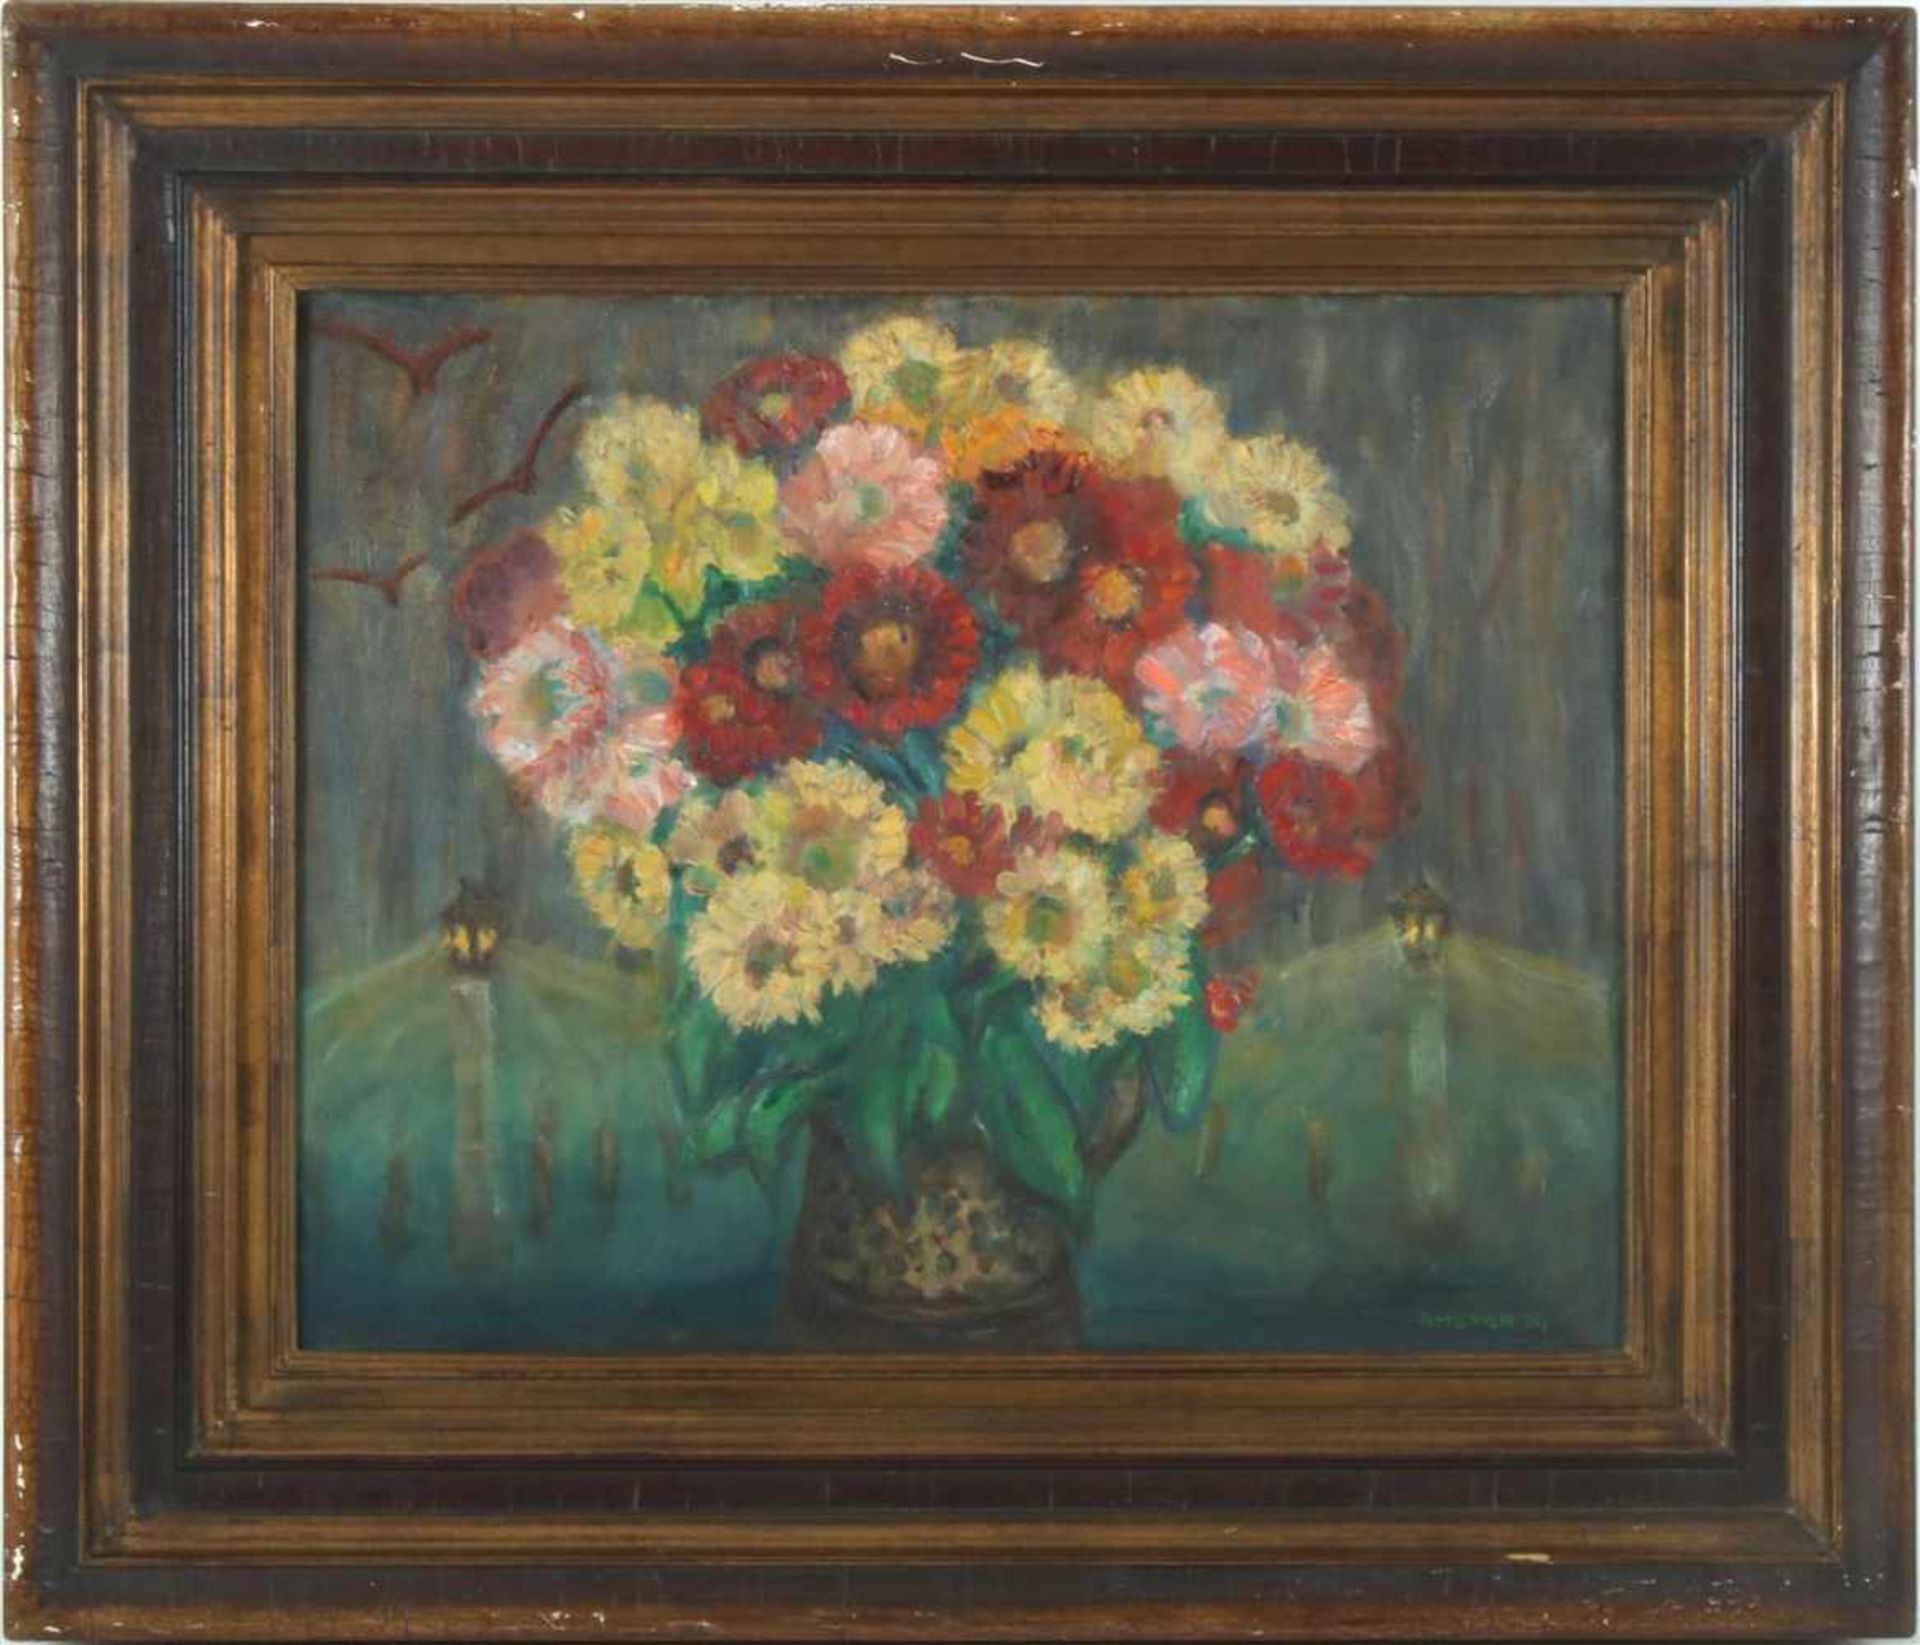 Signed B Meyer, Flower piece, canvas 40x50 cm